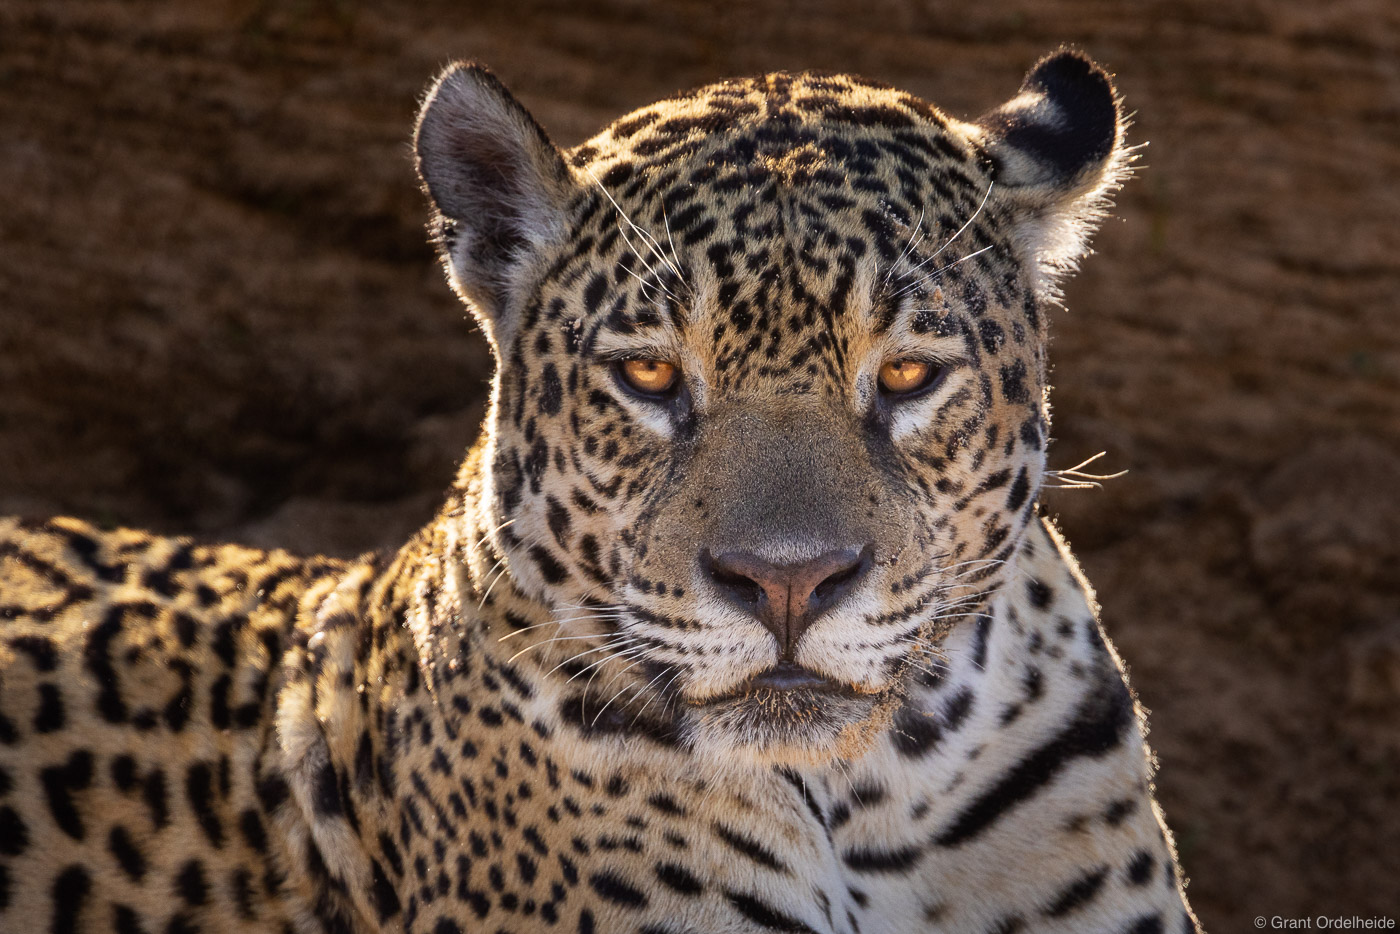 A portrait of a wild jaguar in Brazil's Pantanal.